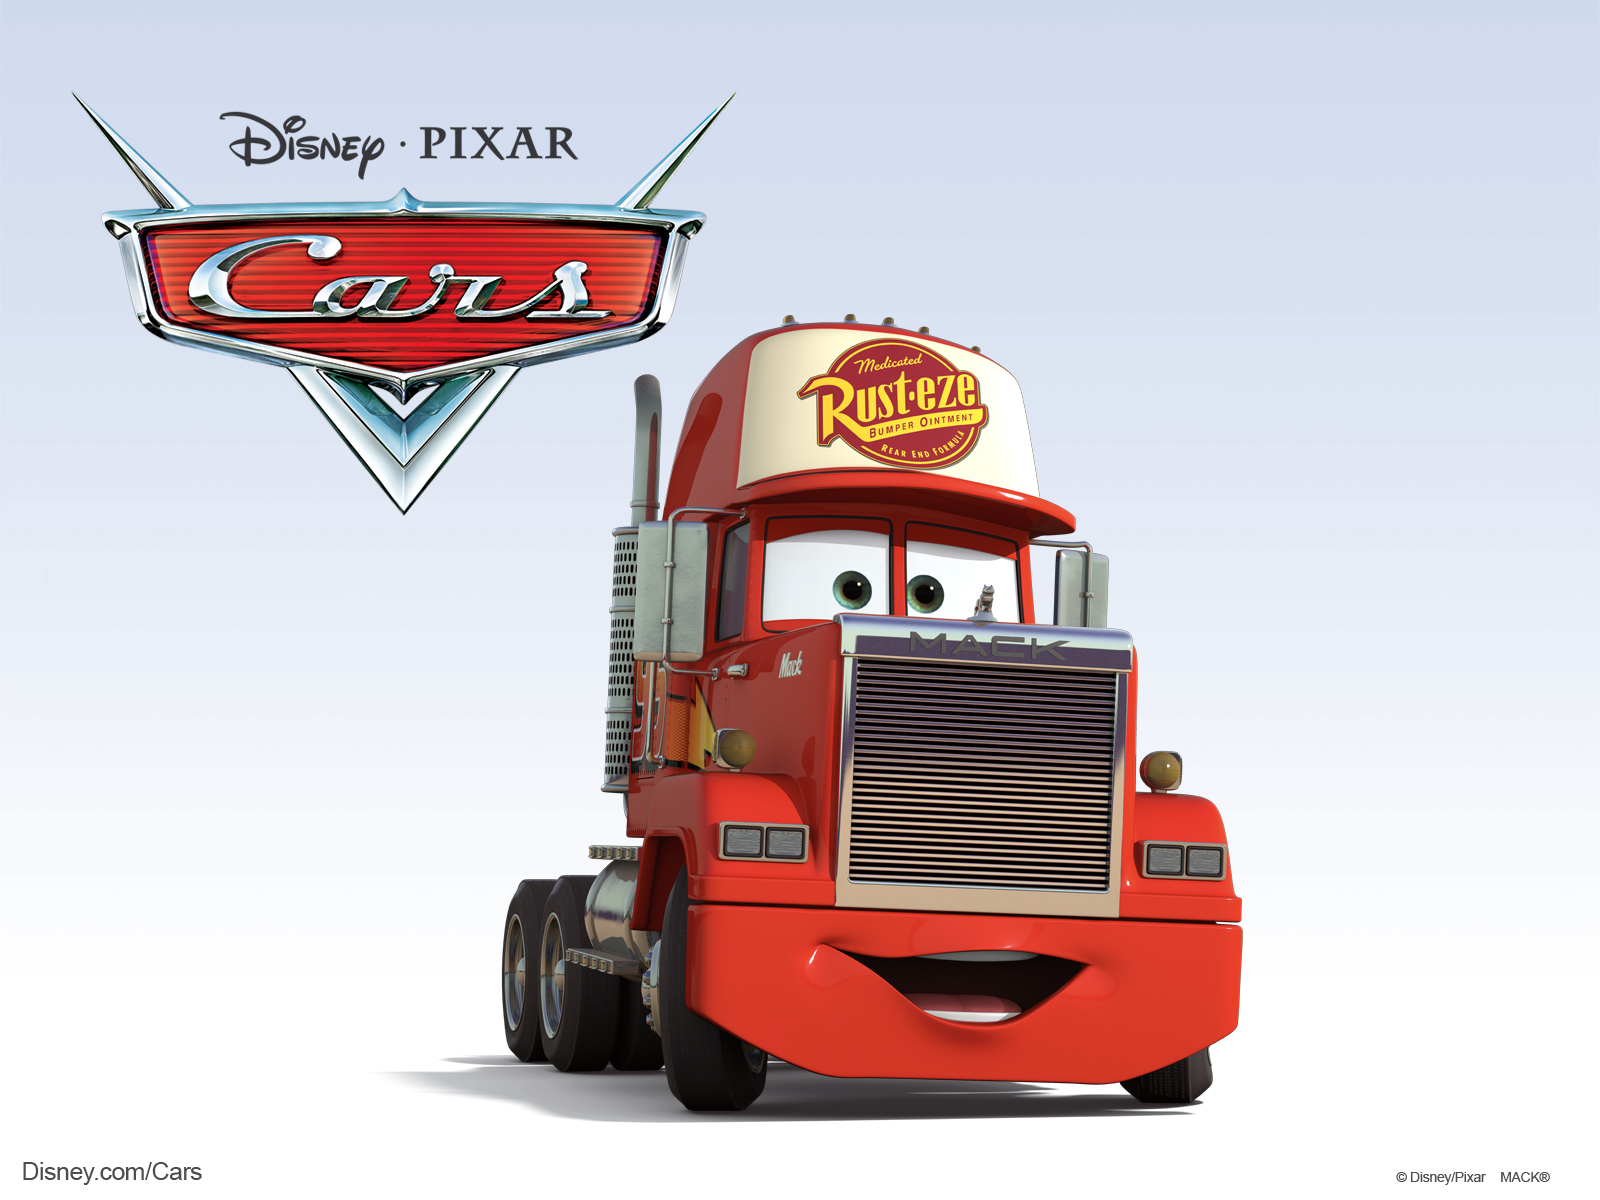 Mack The Truck From Disney-pixar Movie Cars Wallpaper - Disney Cars -  1600x1200 Wallpaper 